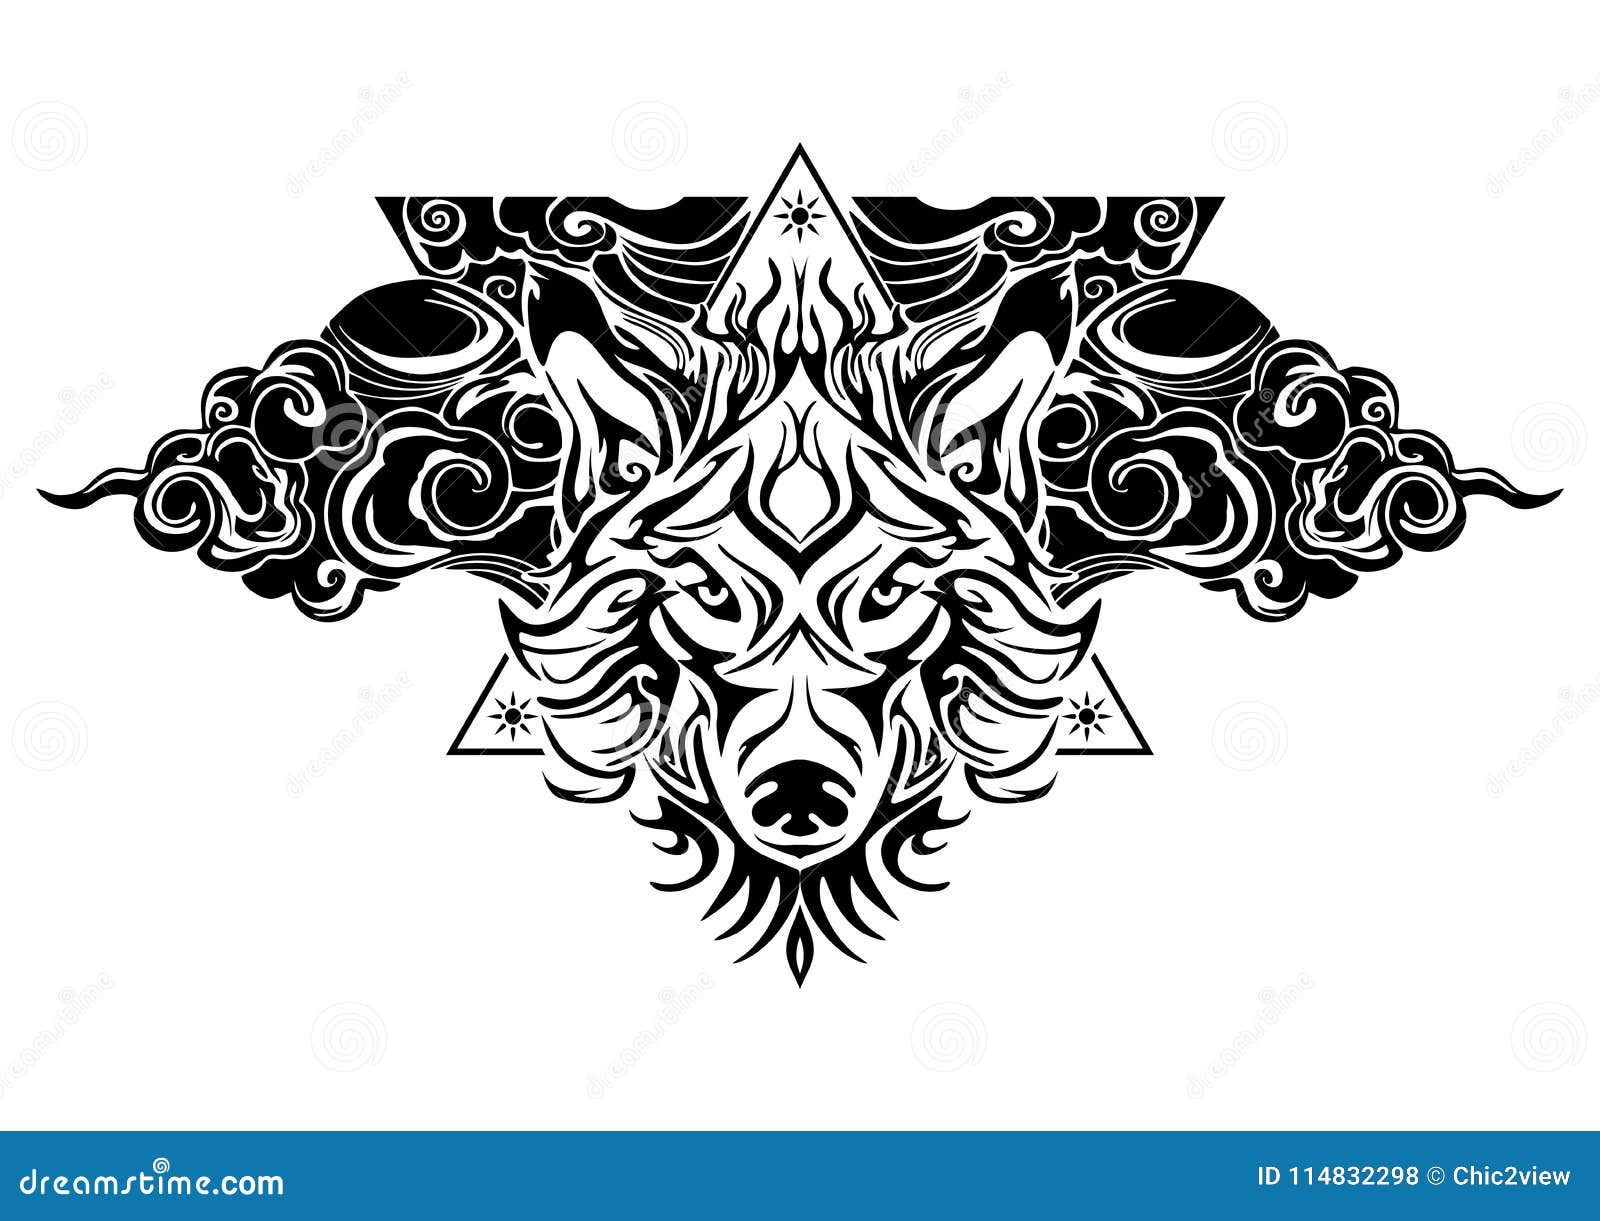 Tribal Wolf Head Tattoo Decorate with Oriental Cloud and Geometric Triangle  Design for Tattoo Stock Illustration - Illustration of geometric, mammal:  114832298